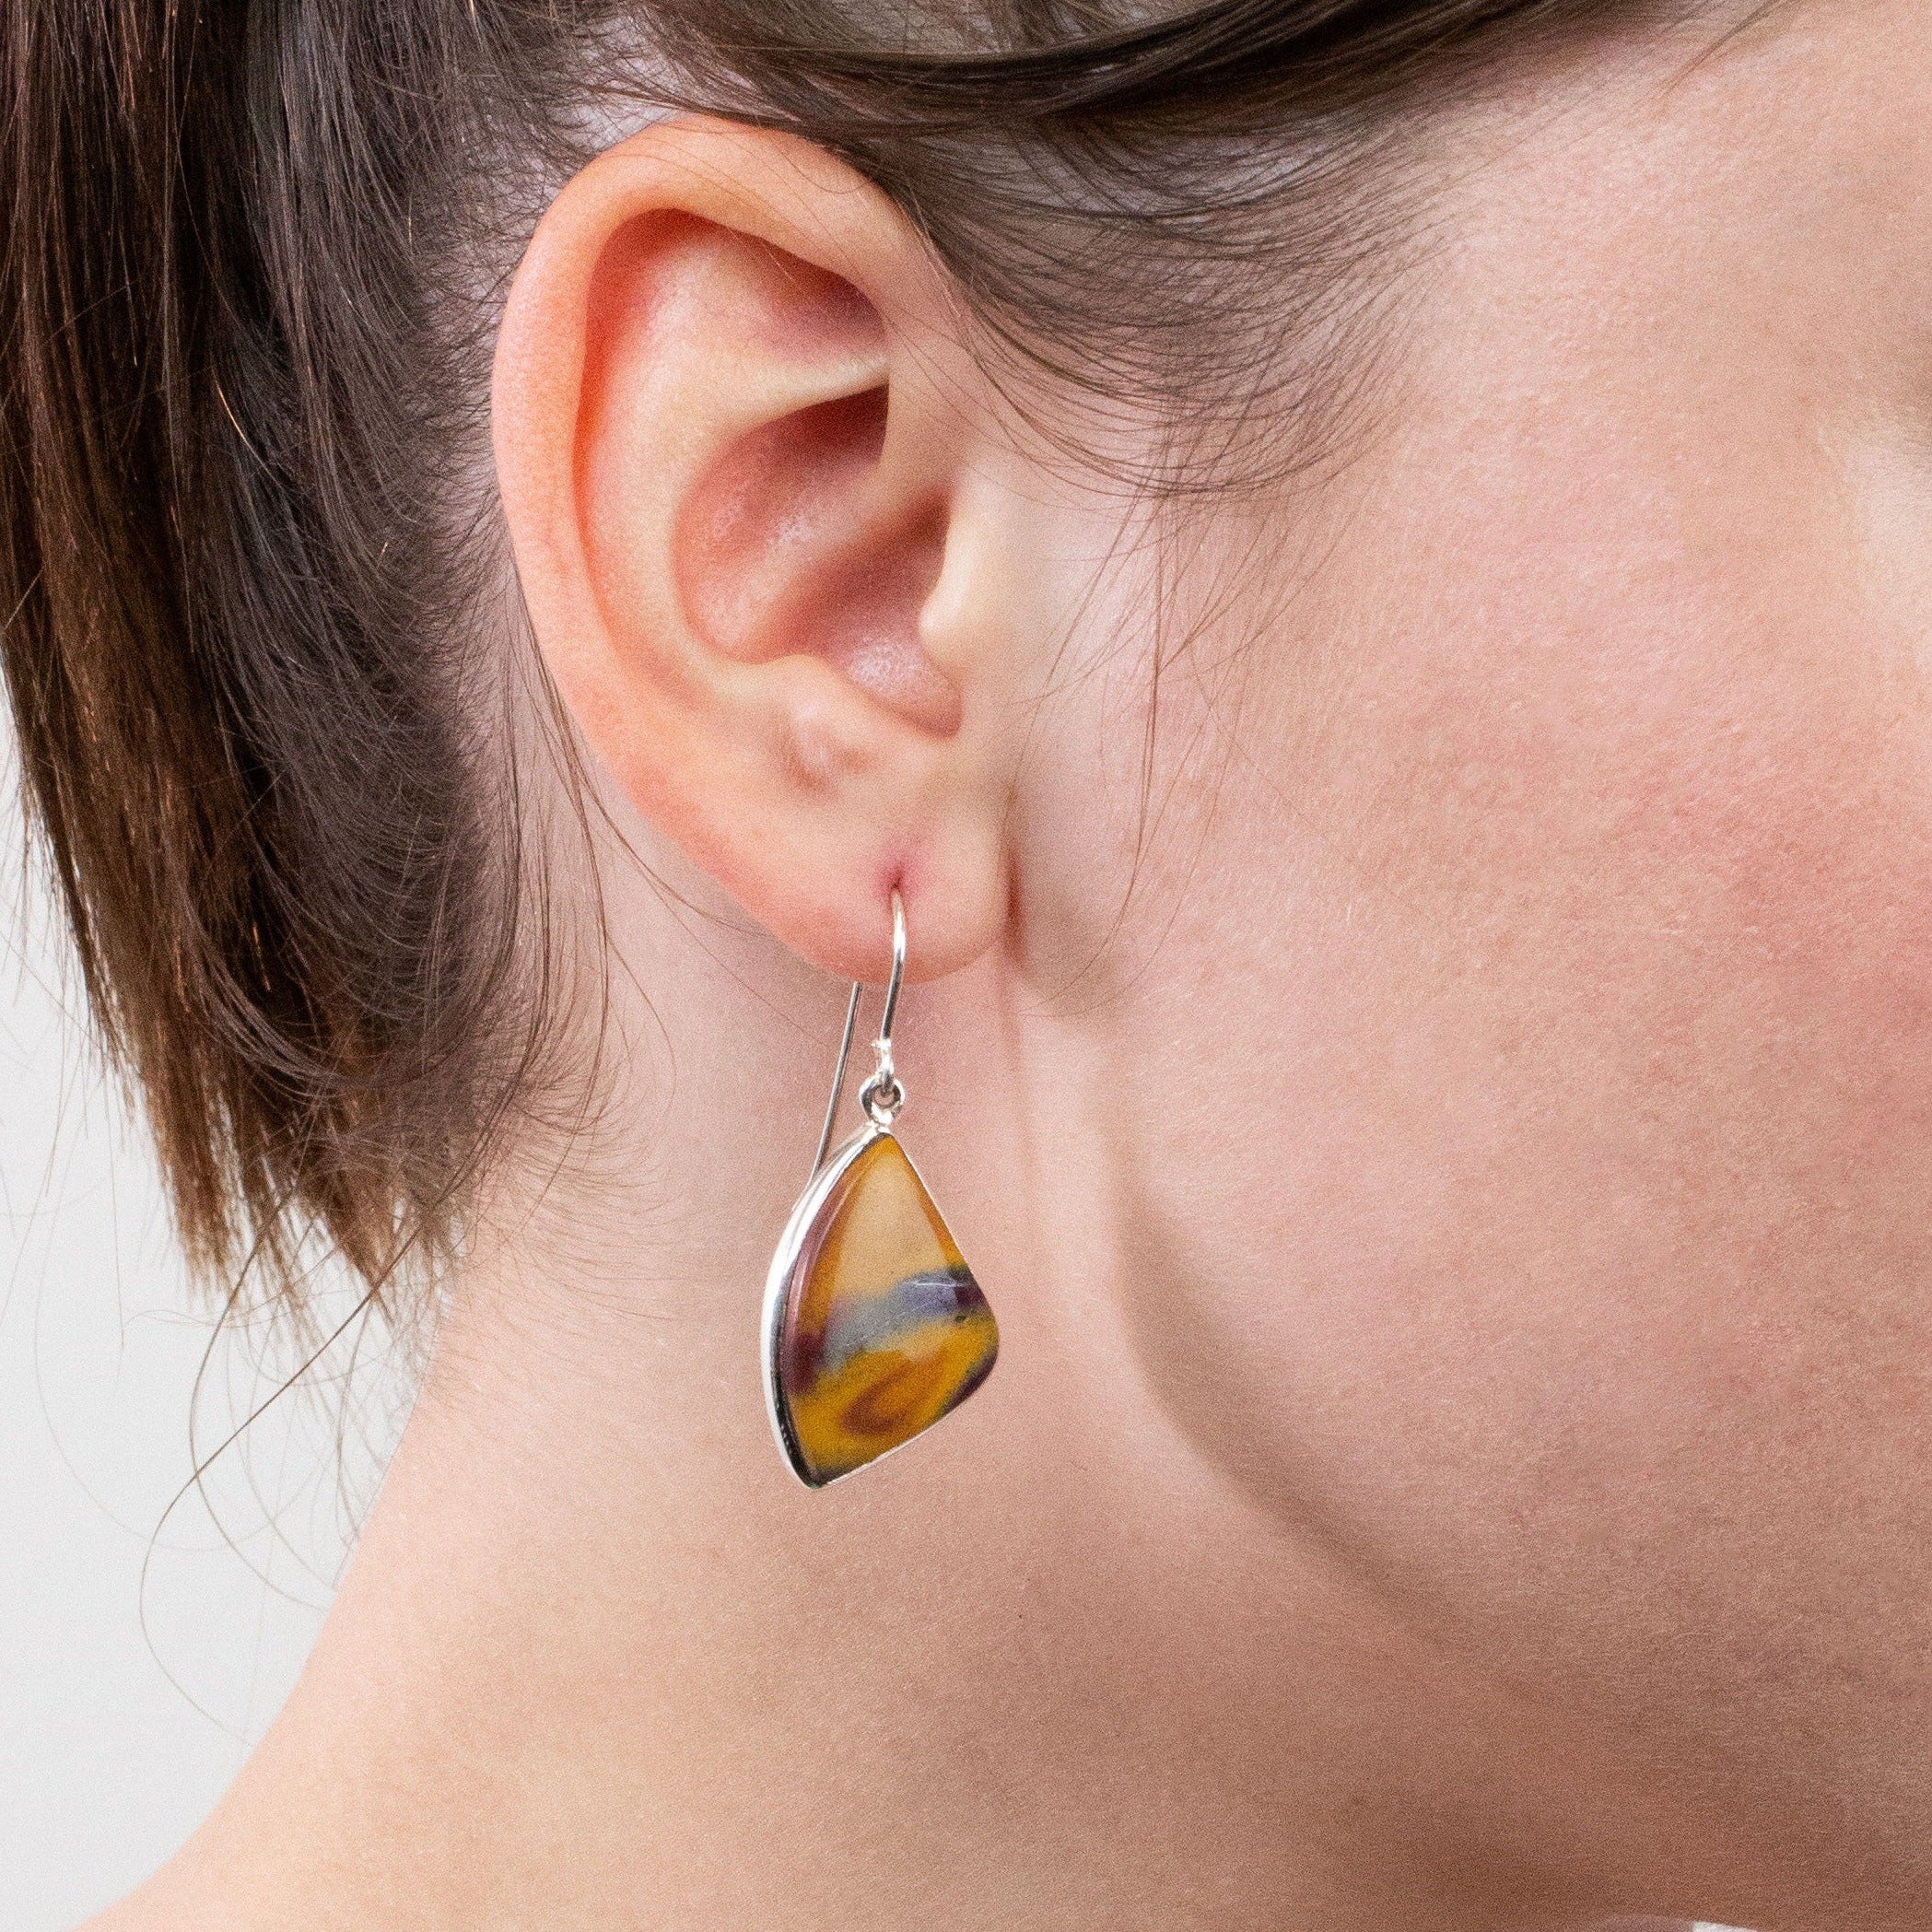 Mookaite earrings on model